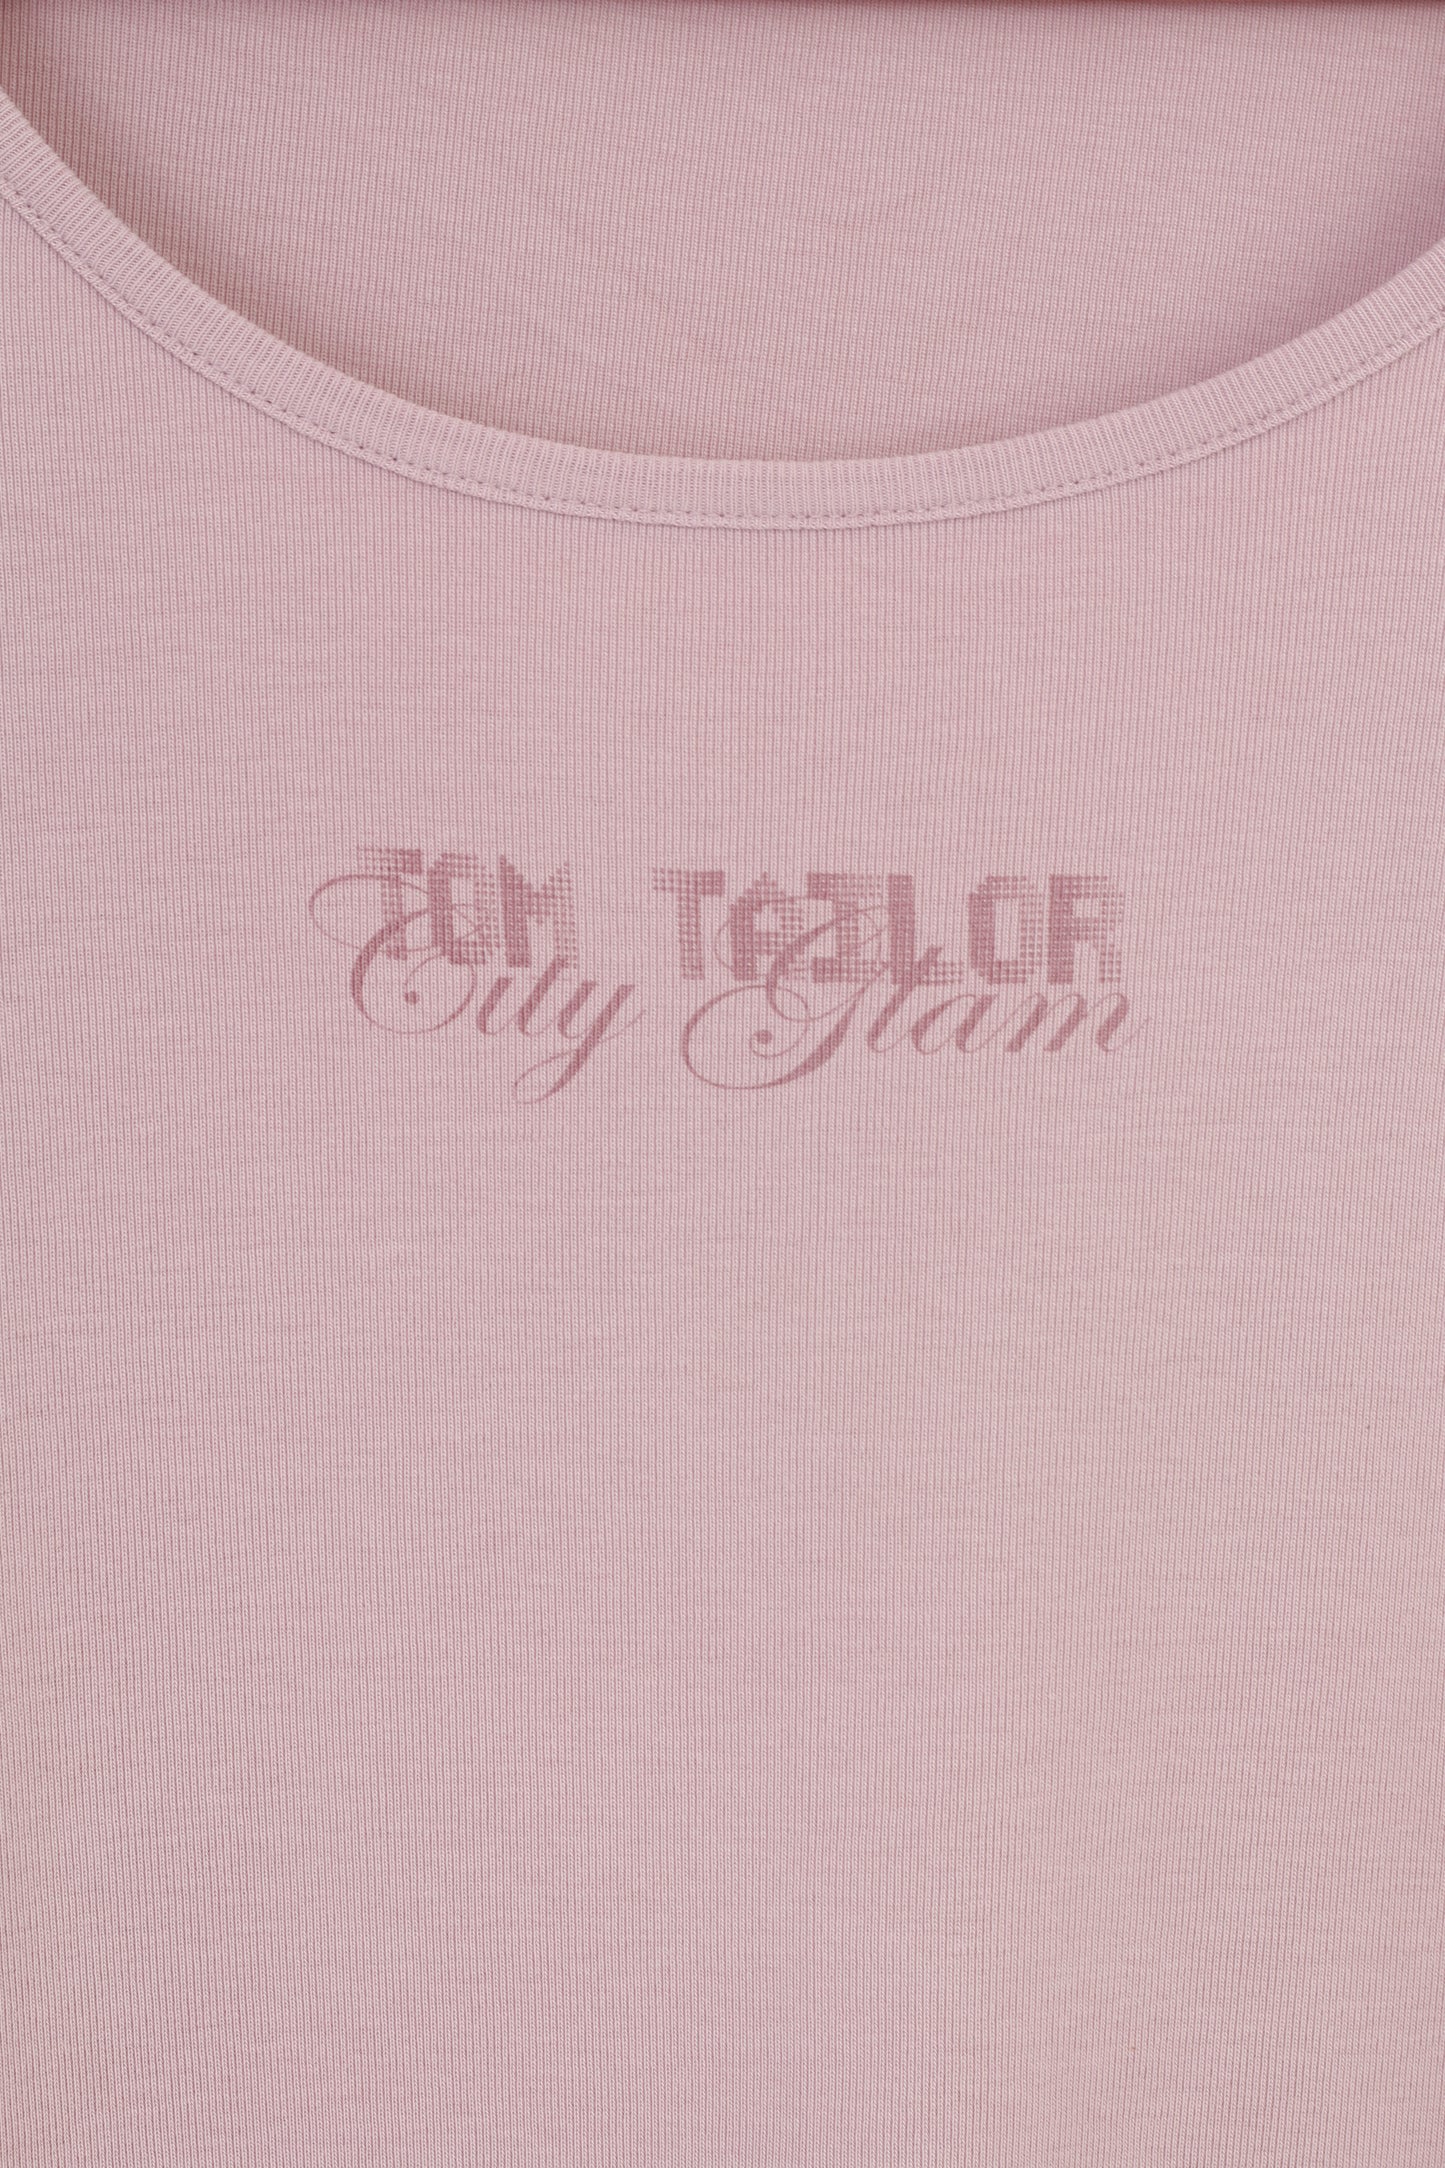 Tom Tailor Women M Shirt Pink City Glam Cotton Top 7/8 Sleeve Crew Neck Top